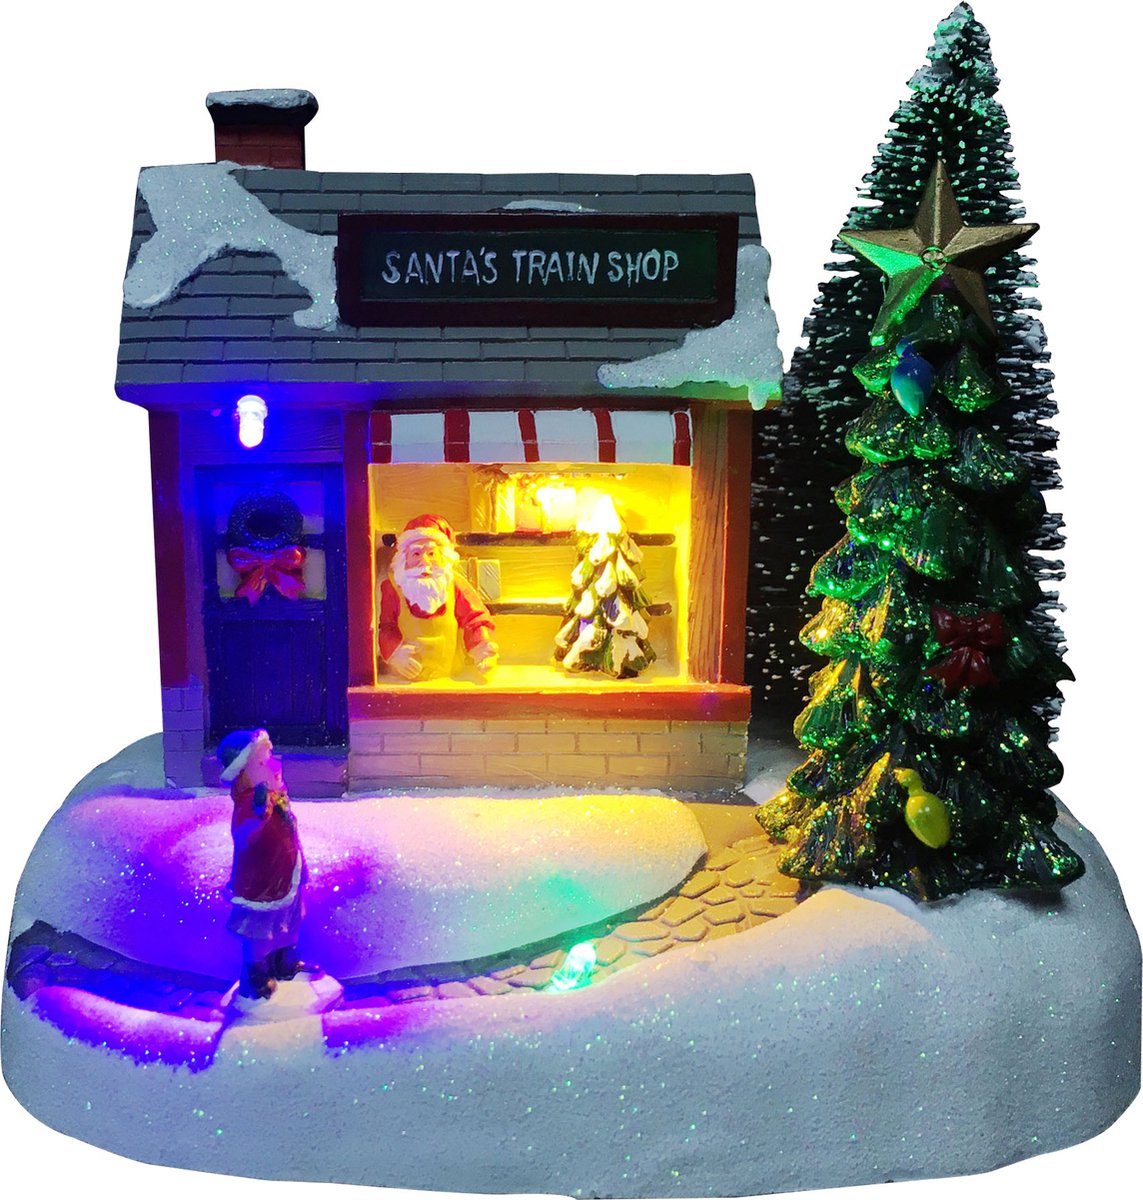 Kristmar Santa's train shop with LED lighting